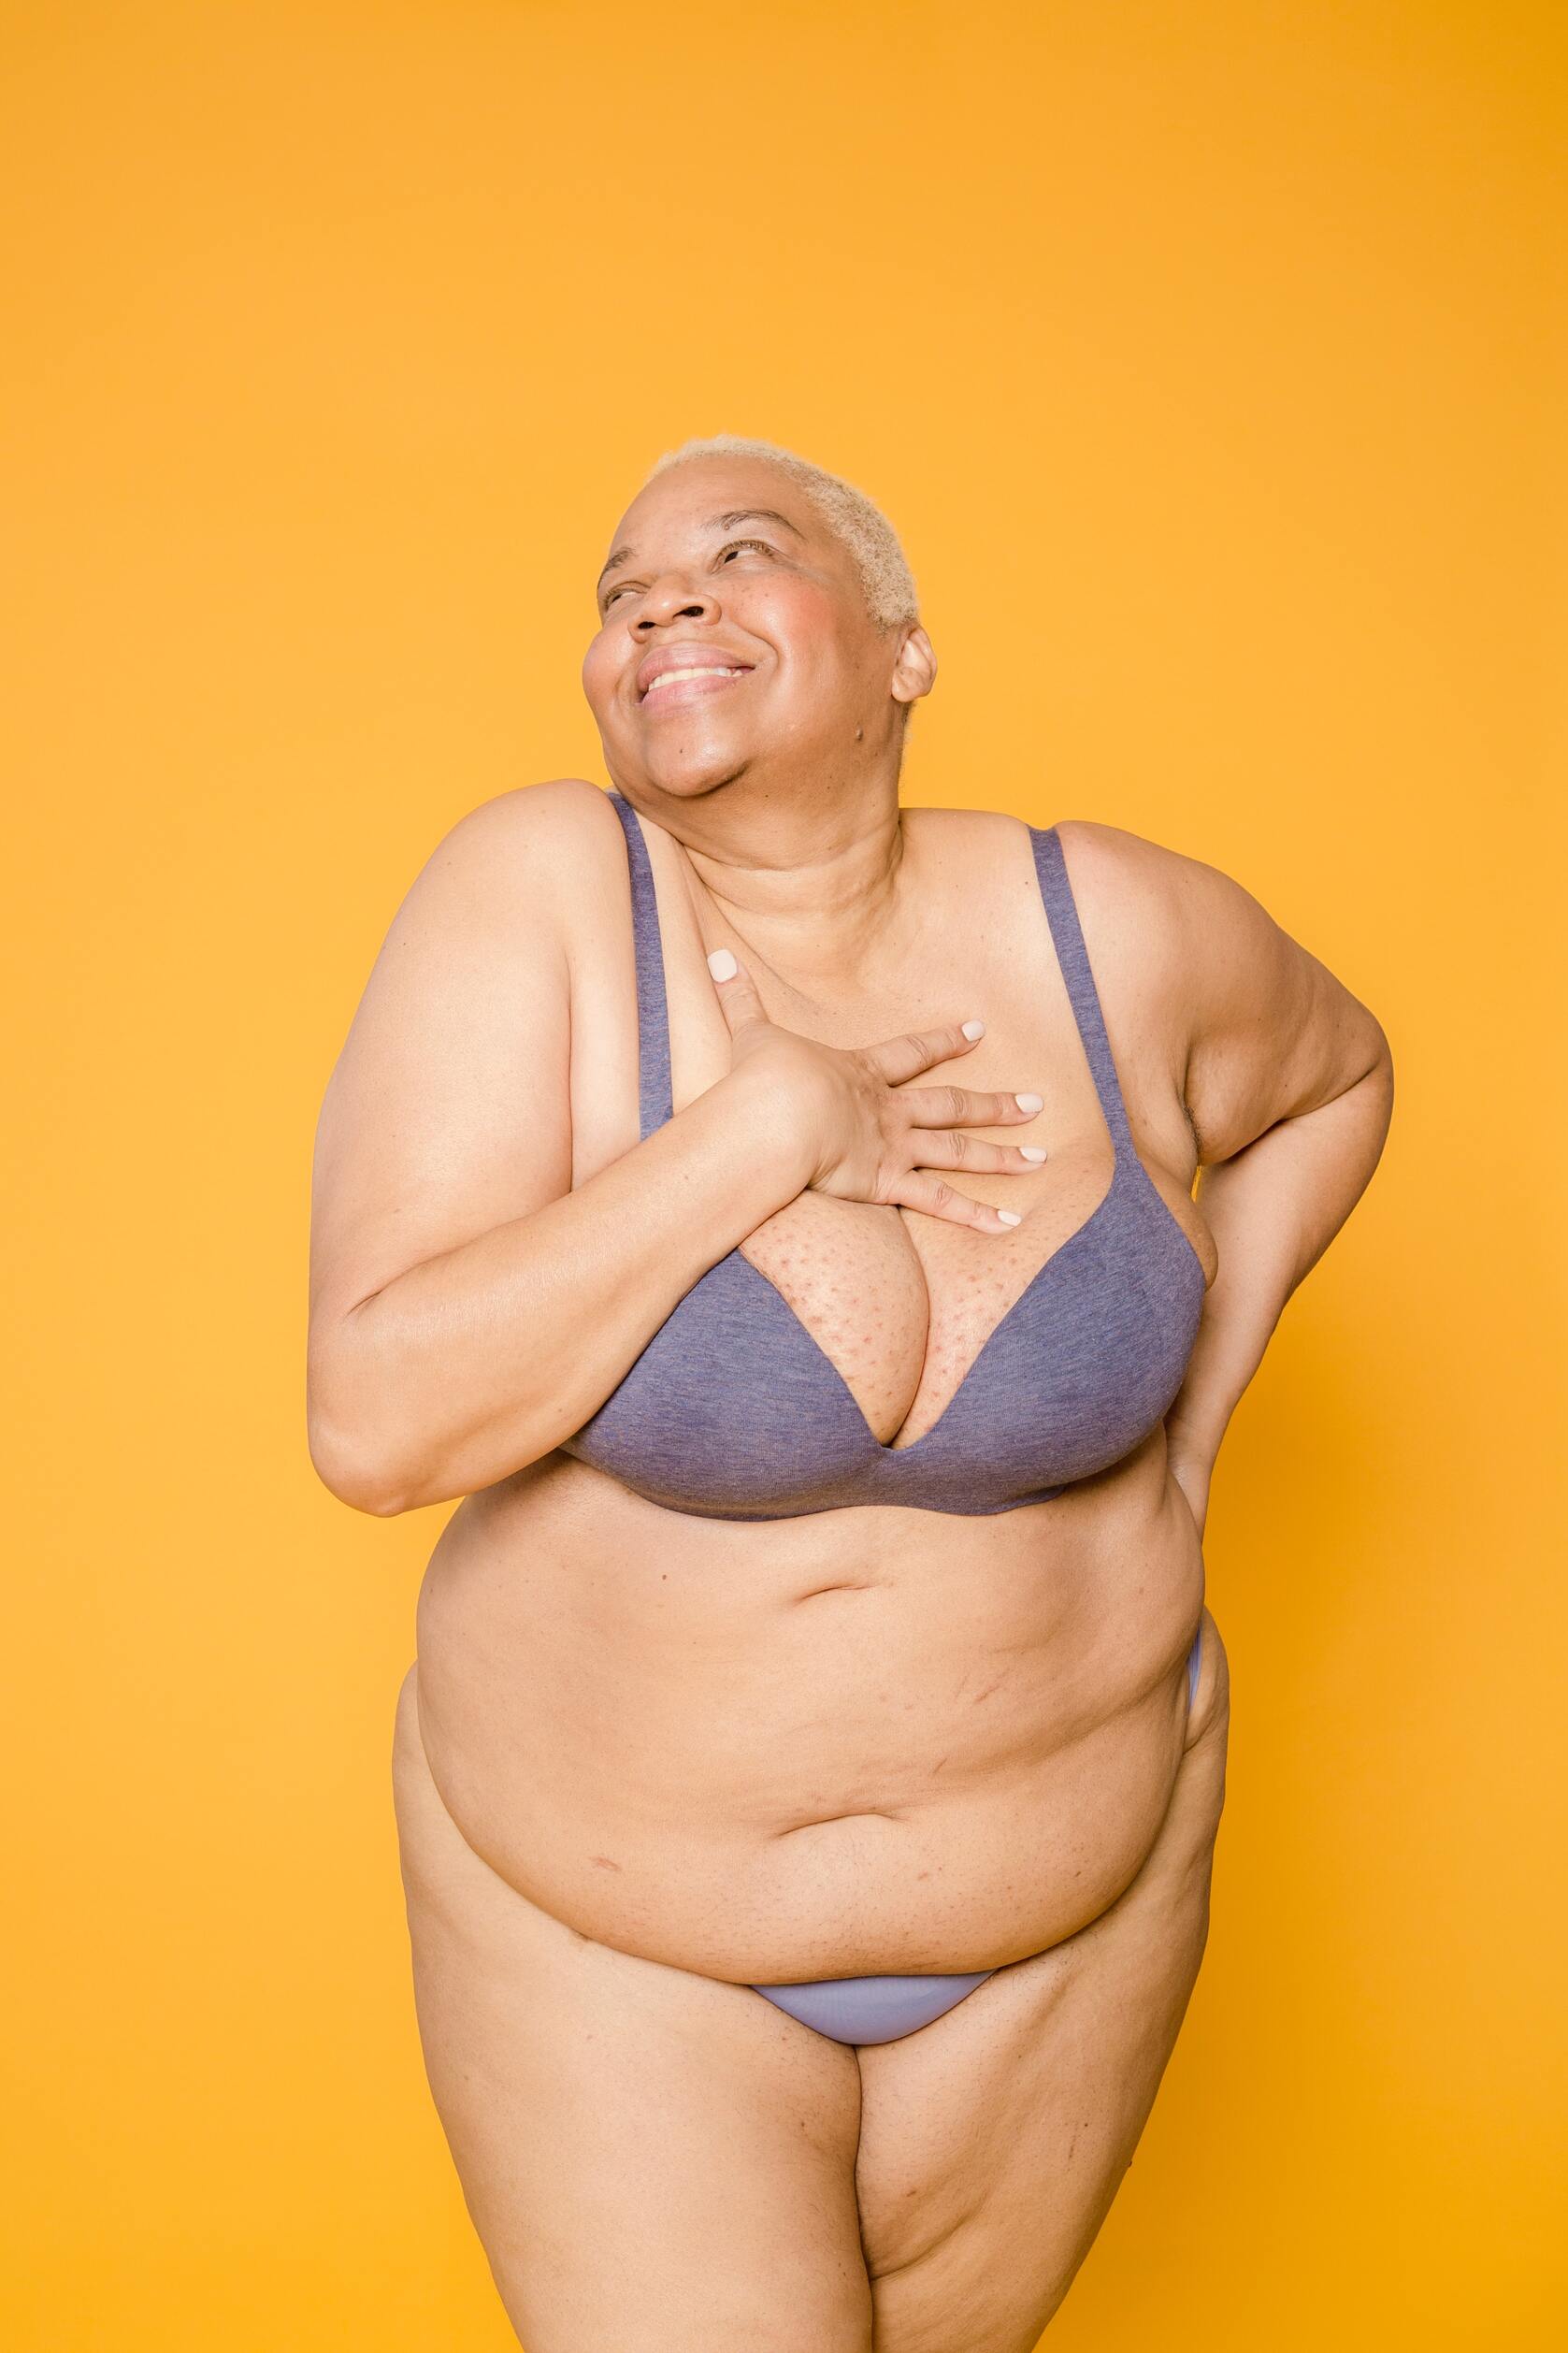 bra size chart - woman posing in bra and underwear